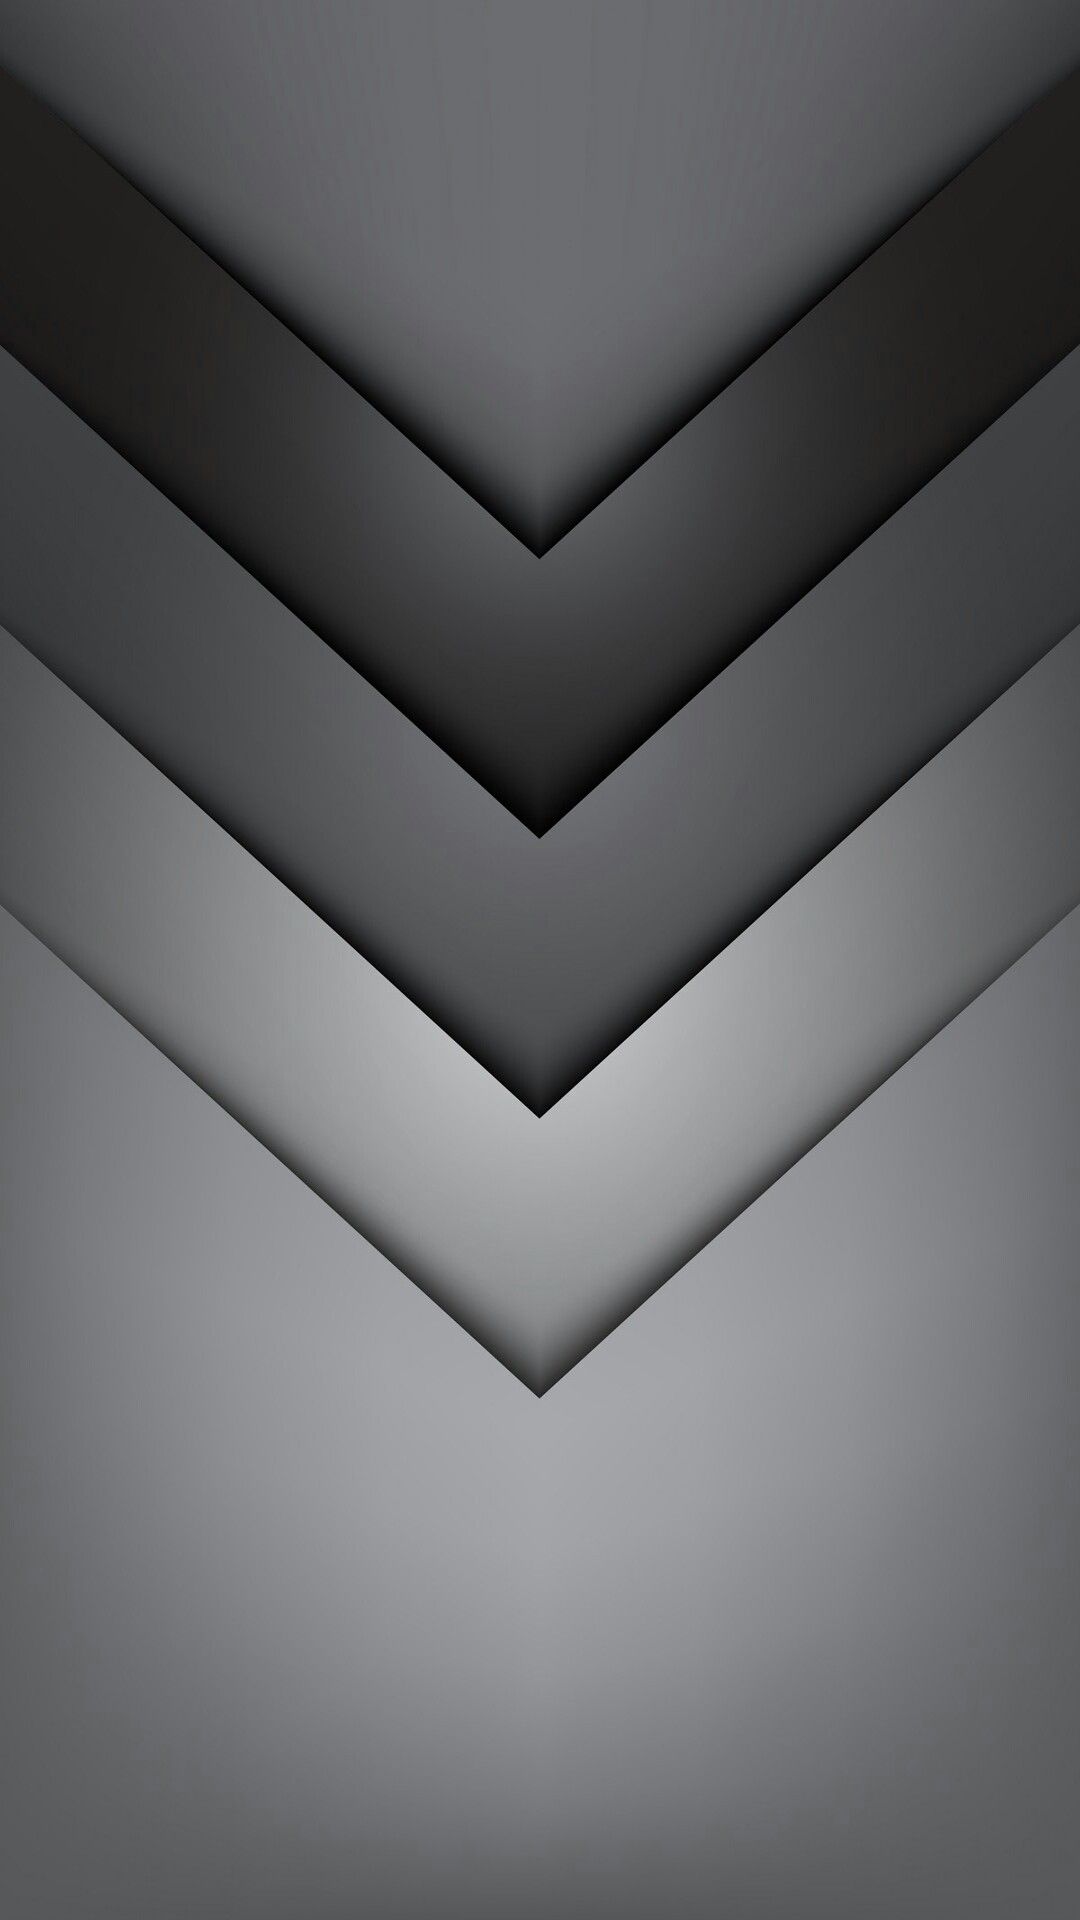 Gradient Grey Chevron Wallpaper. Background phone wallpaper, Phone wallpaper, Android wallpaper